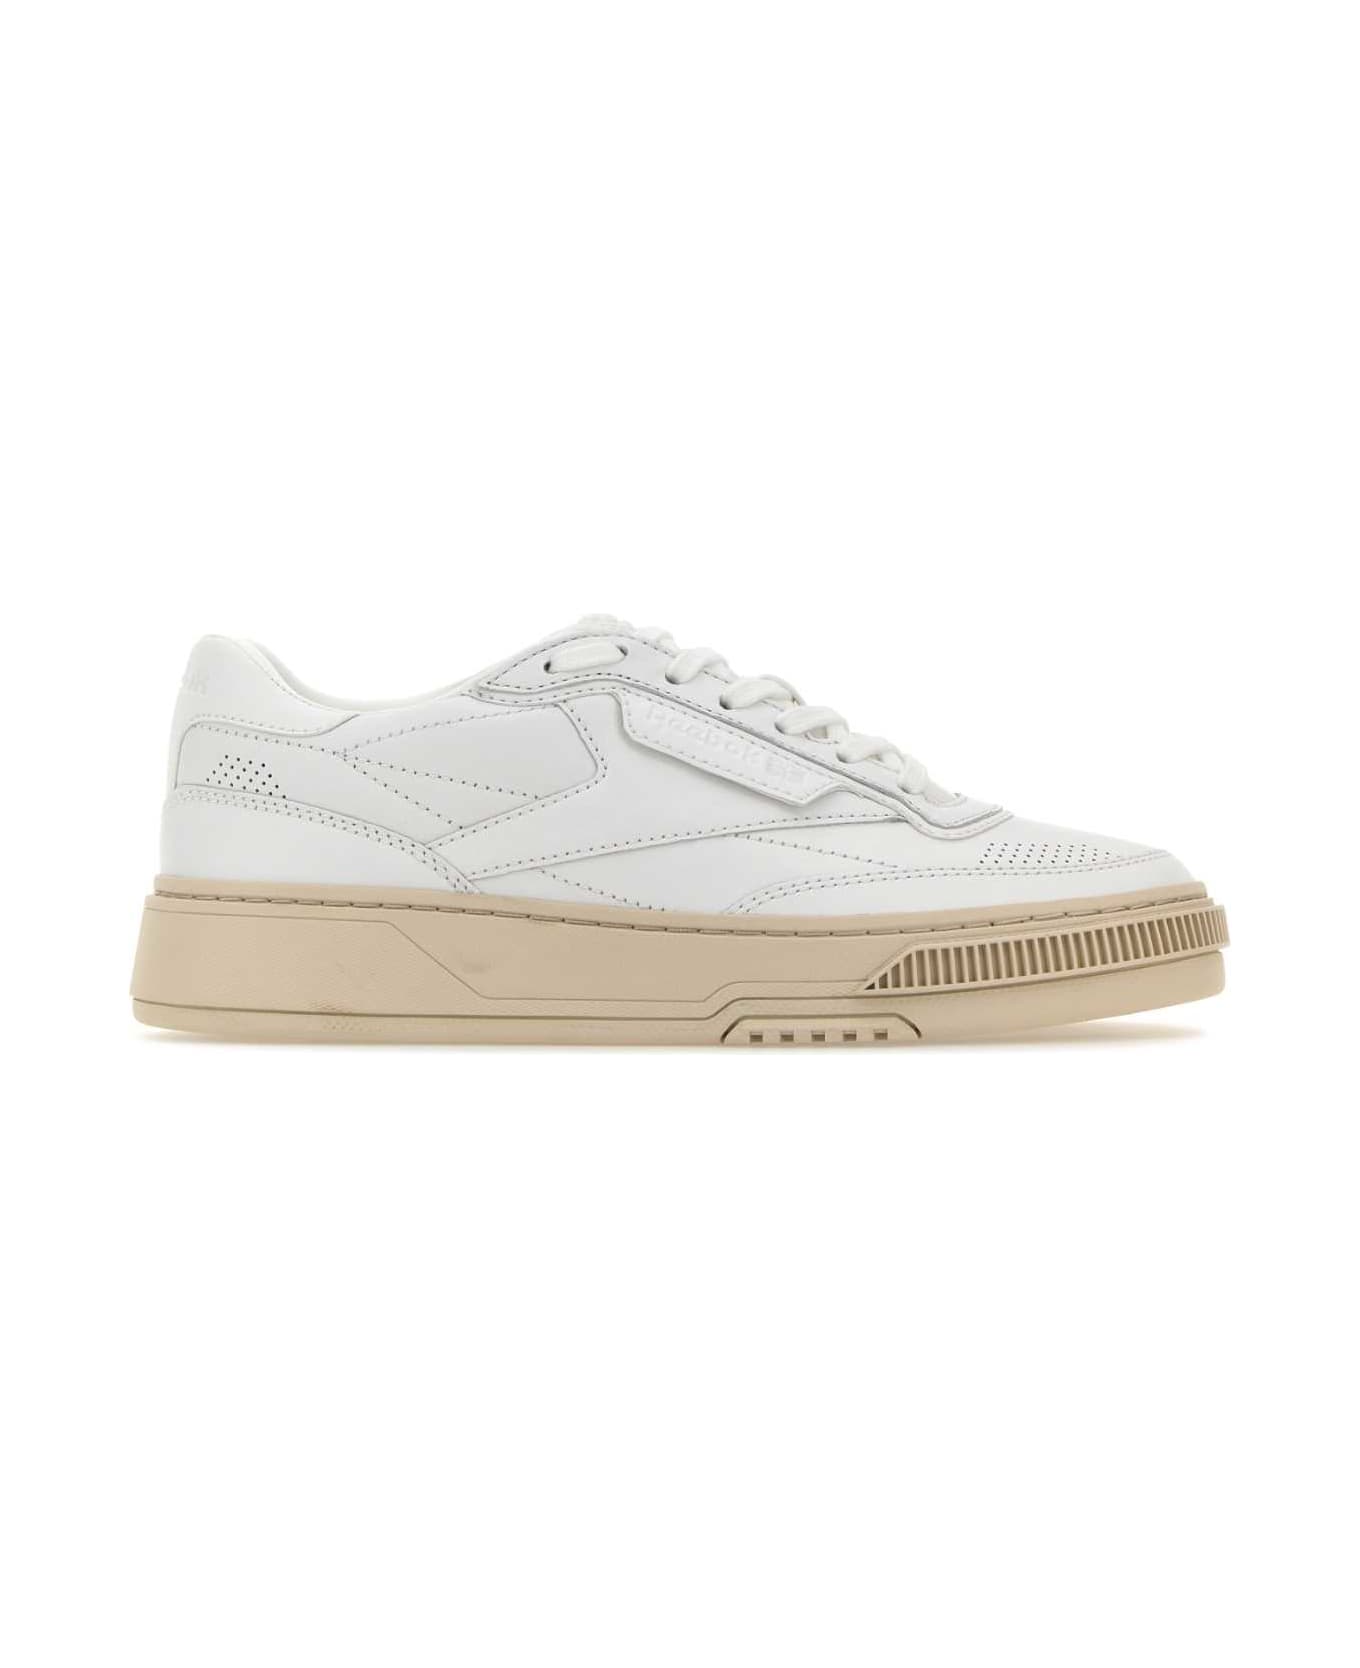 Reebok White Leather Club C Ltd Sneakers - White スニーカー